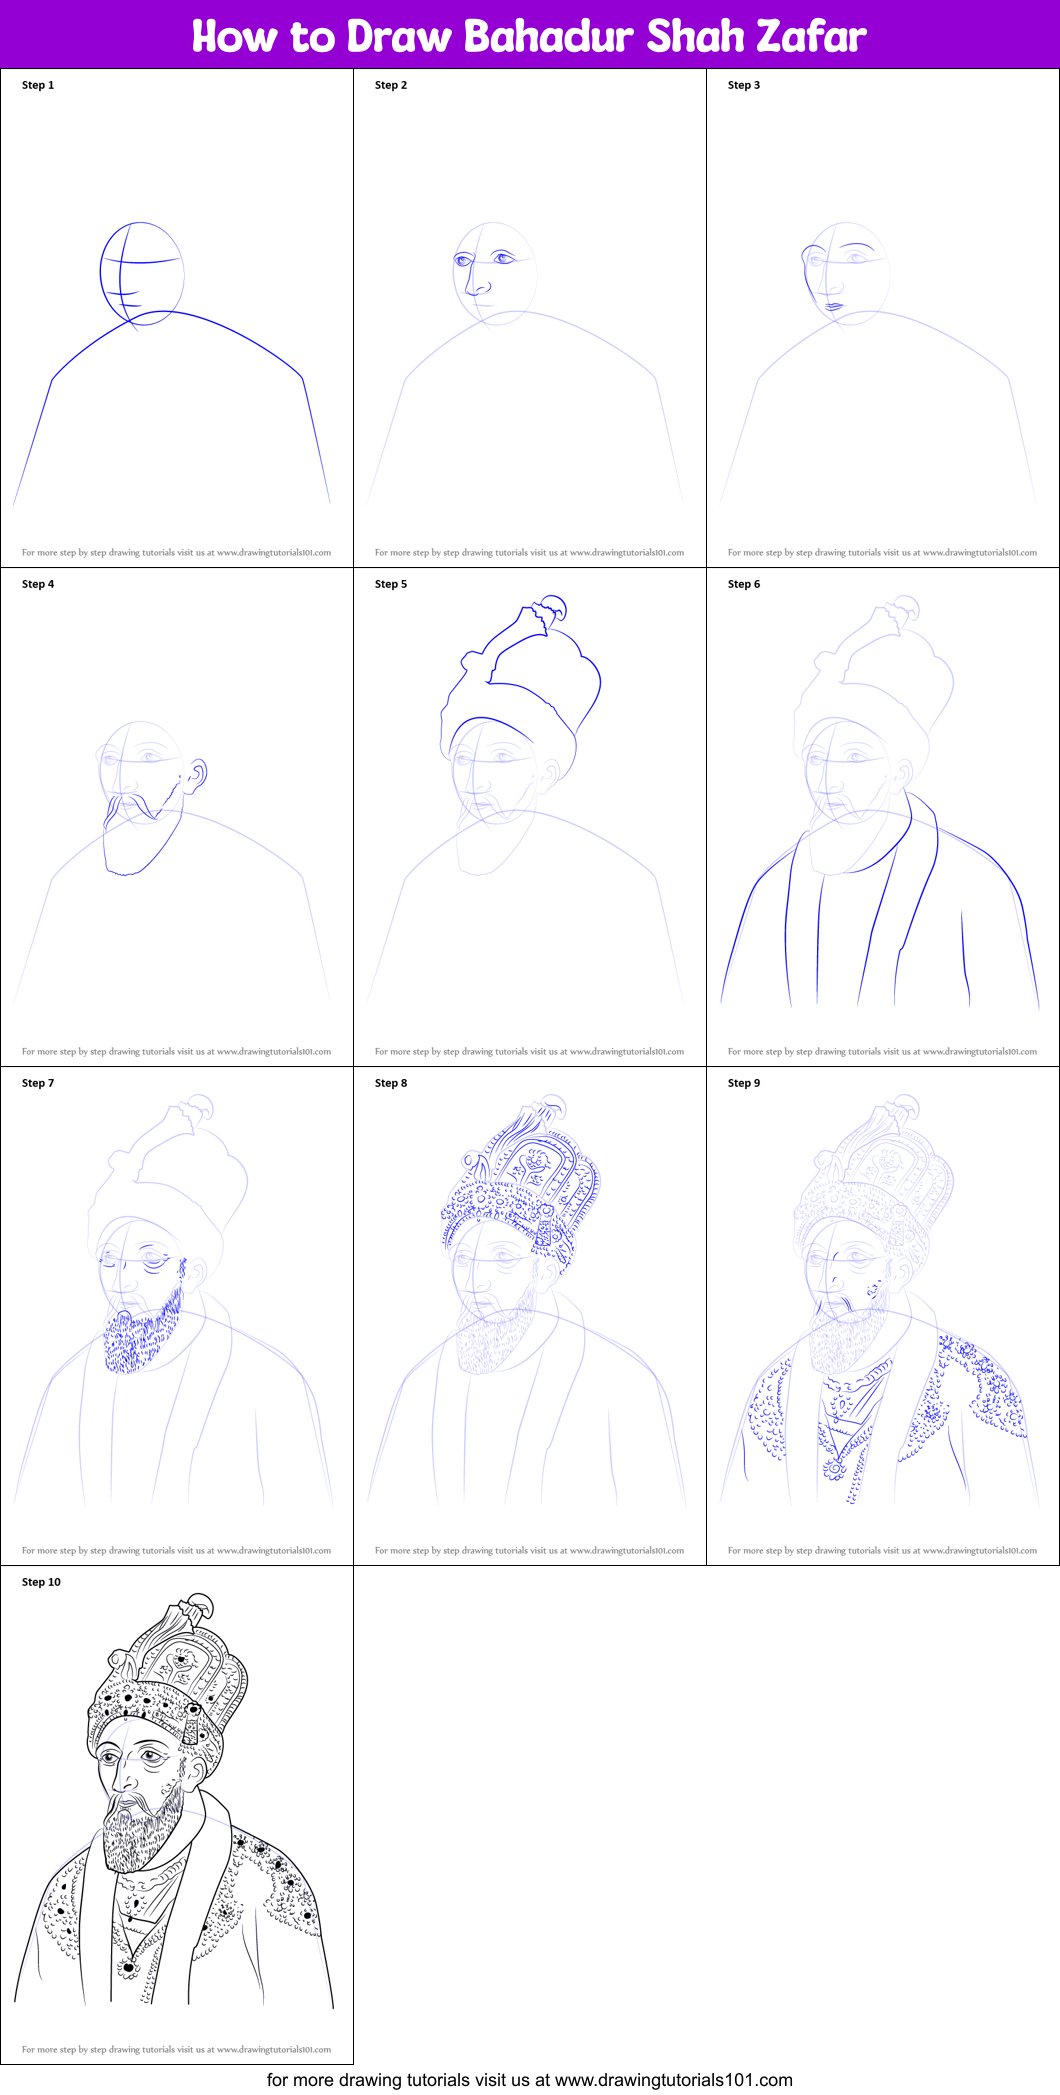 Bahadur Shah Zafar Drawing  sketch  art  Full Video Tutorial  Freedom  fighter  art drawing  YouTube